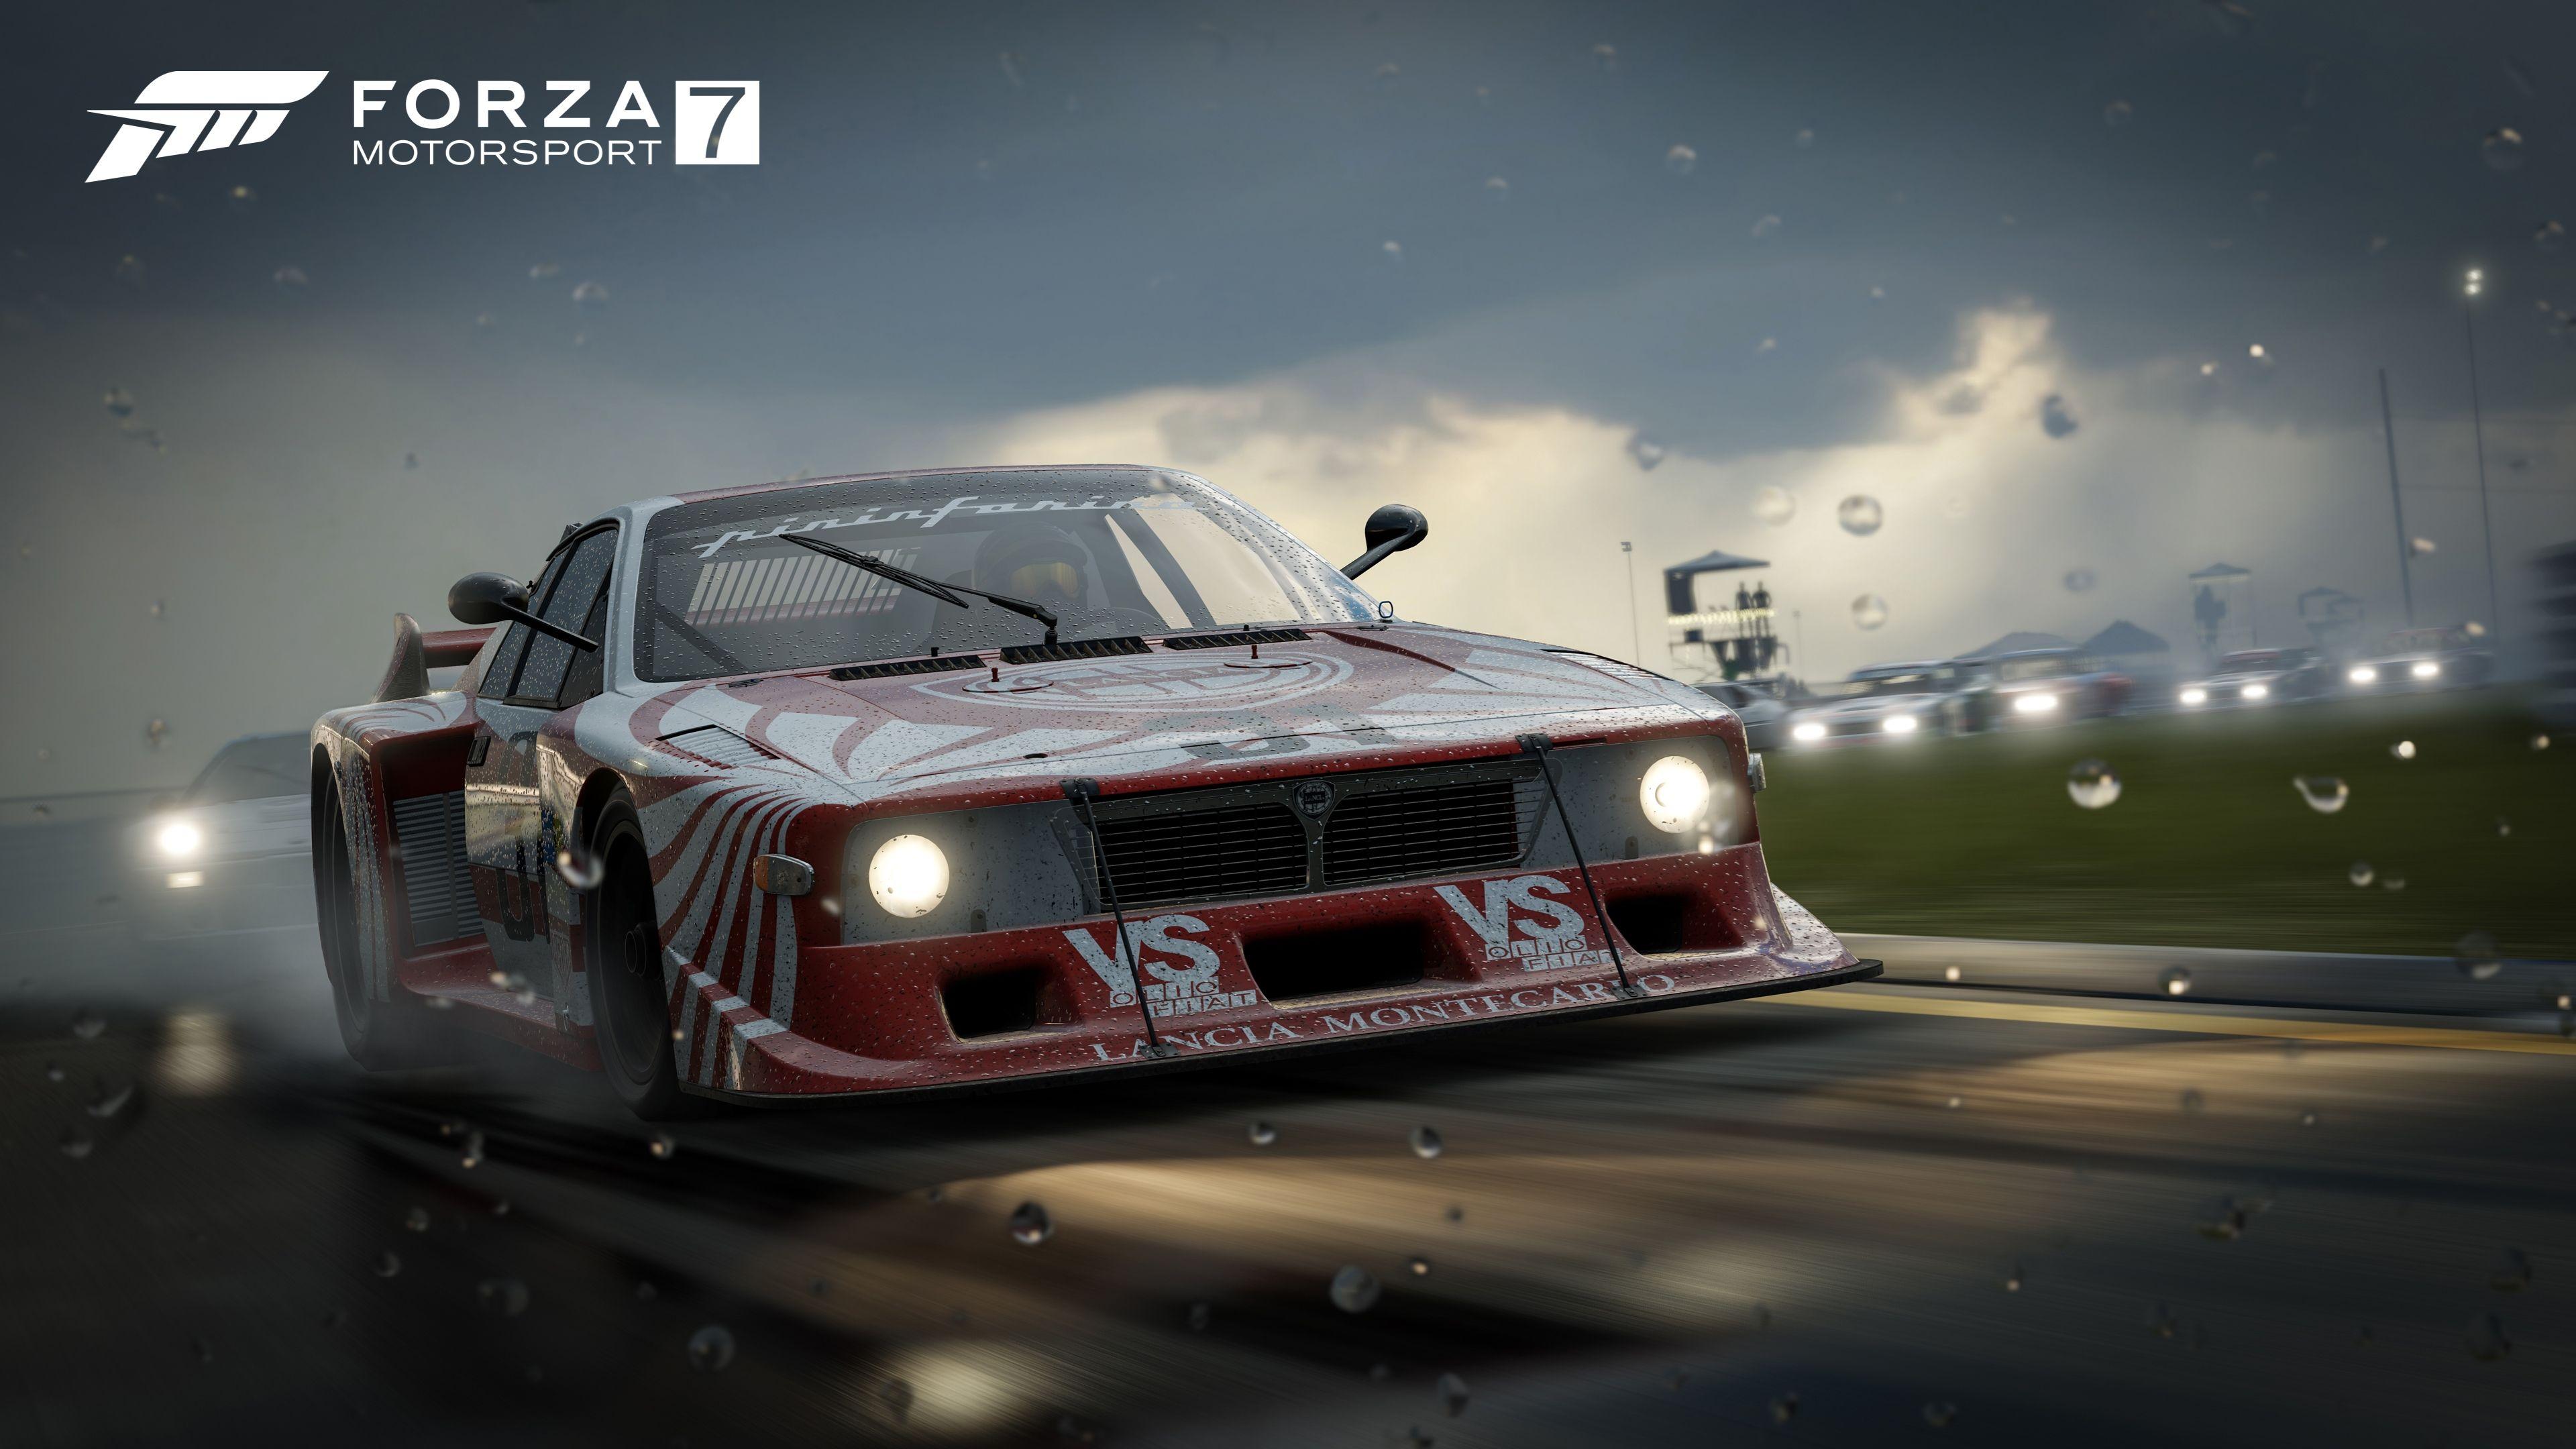 UHD 4K Racing Cars Forza Motorsport 7